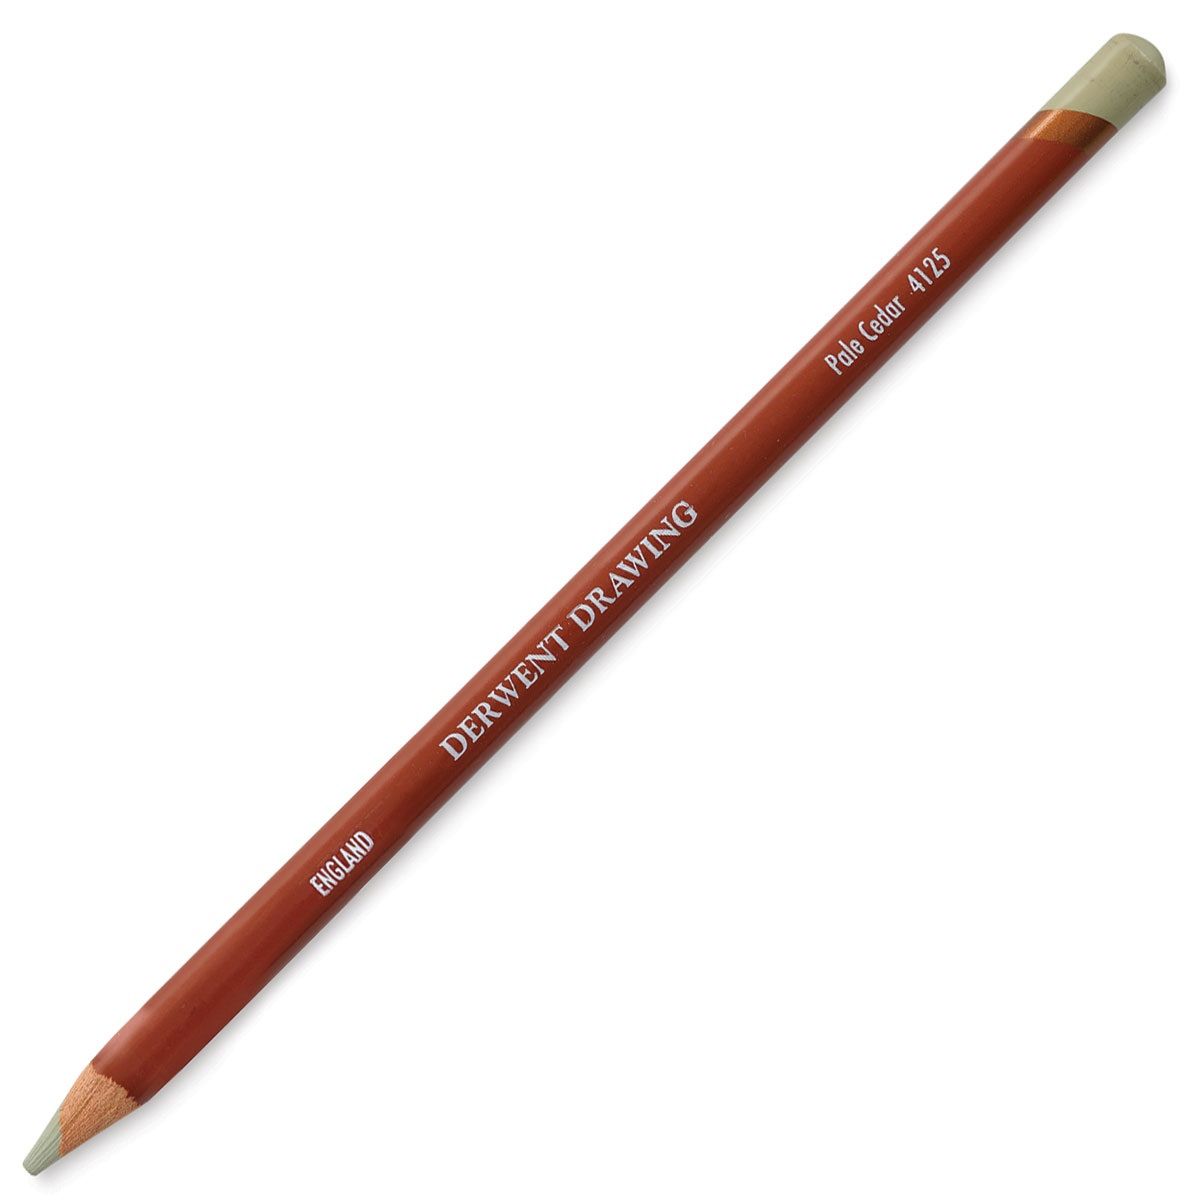 Derwent Drawing Pencil - Pale Cedar